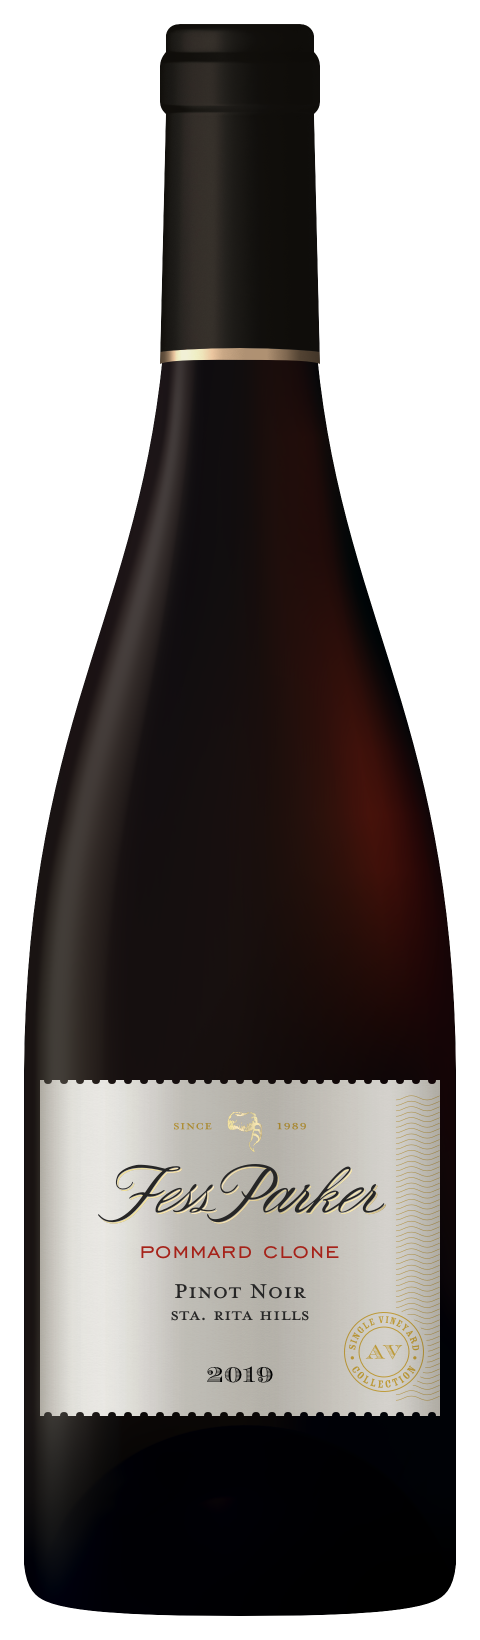 Bottle shot of Pommard Clone Pinot Noir